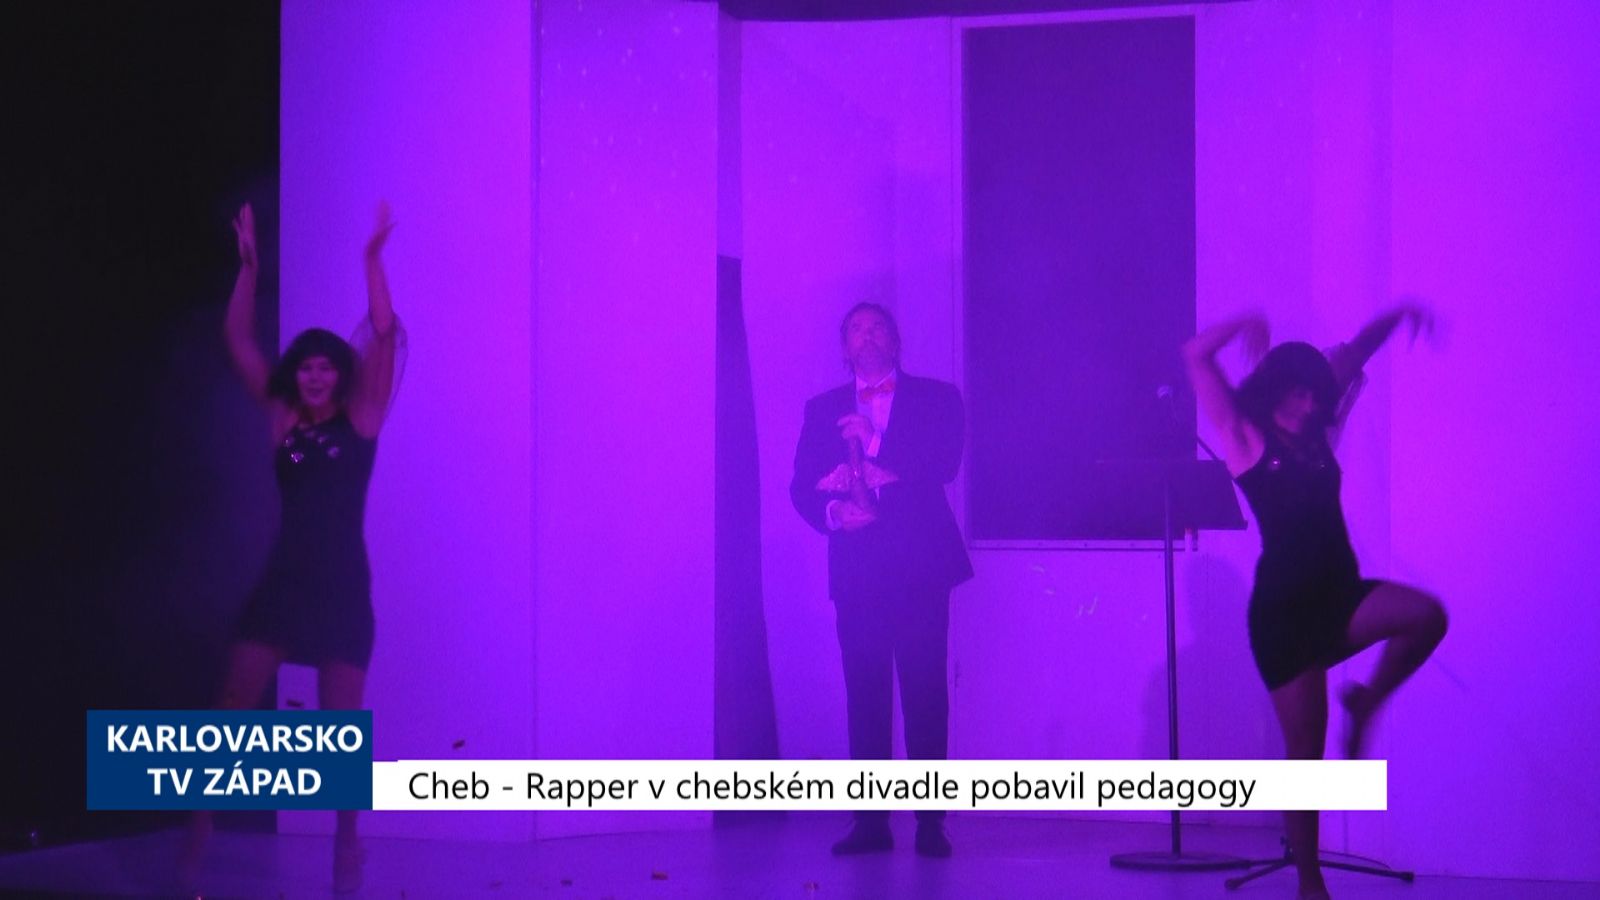 Cheb: Rapper v divadle pobavil pedagogy (TV Západ)